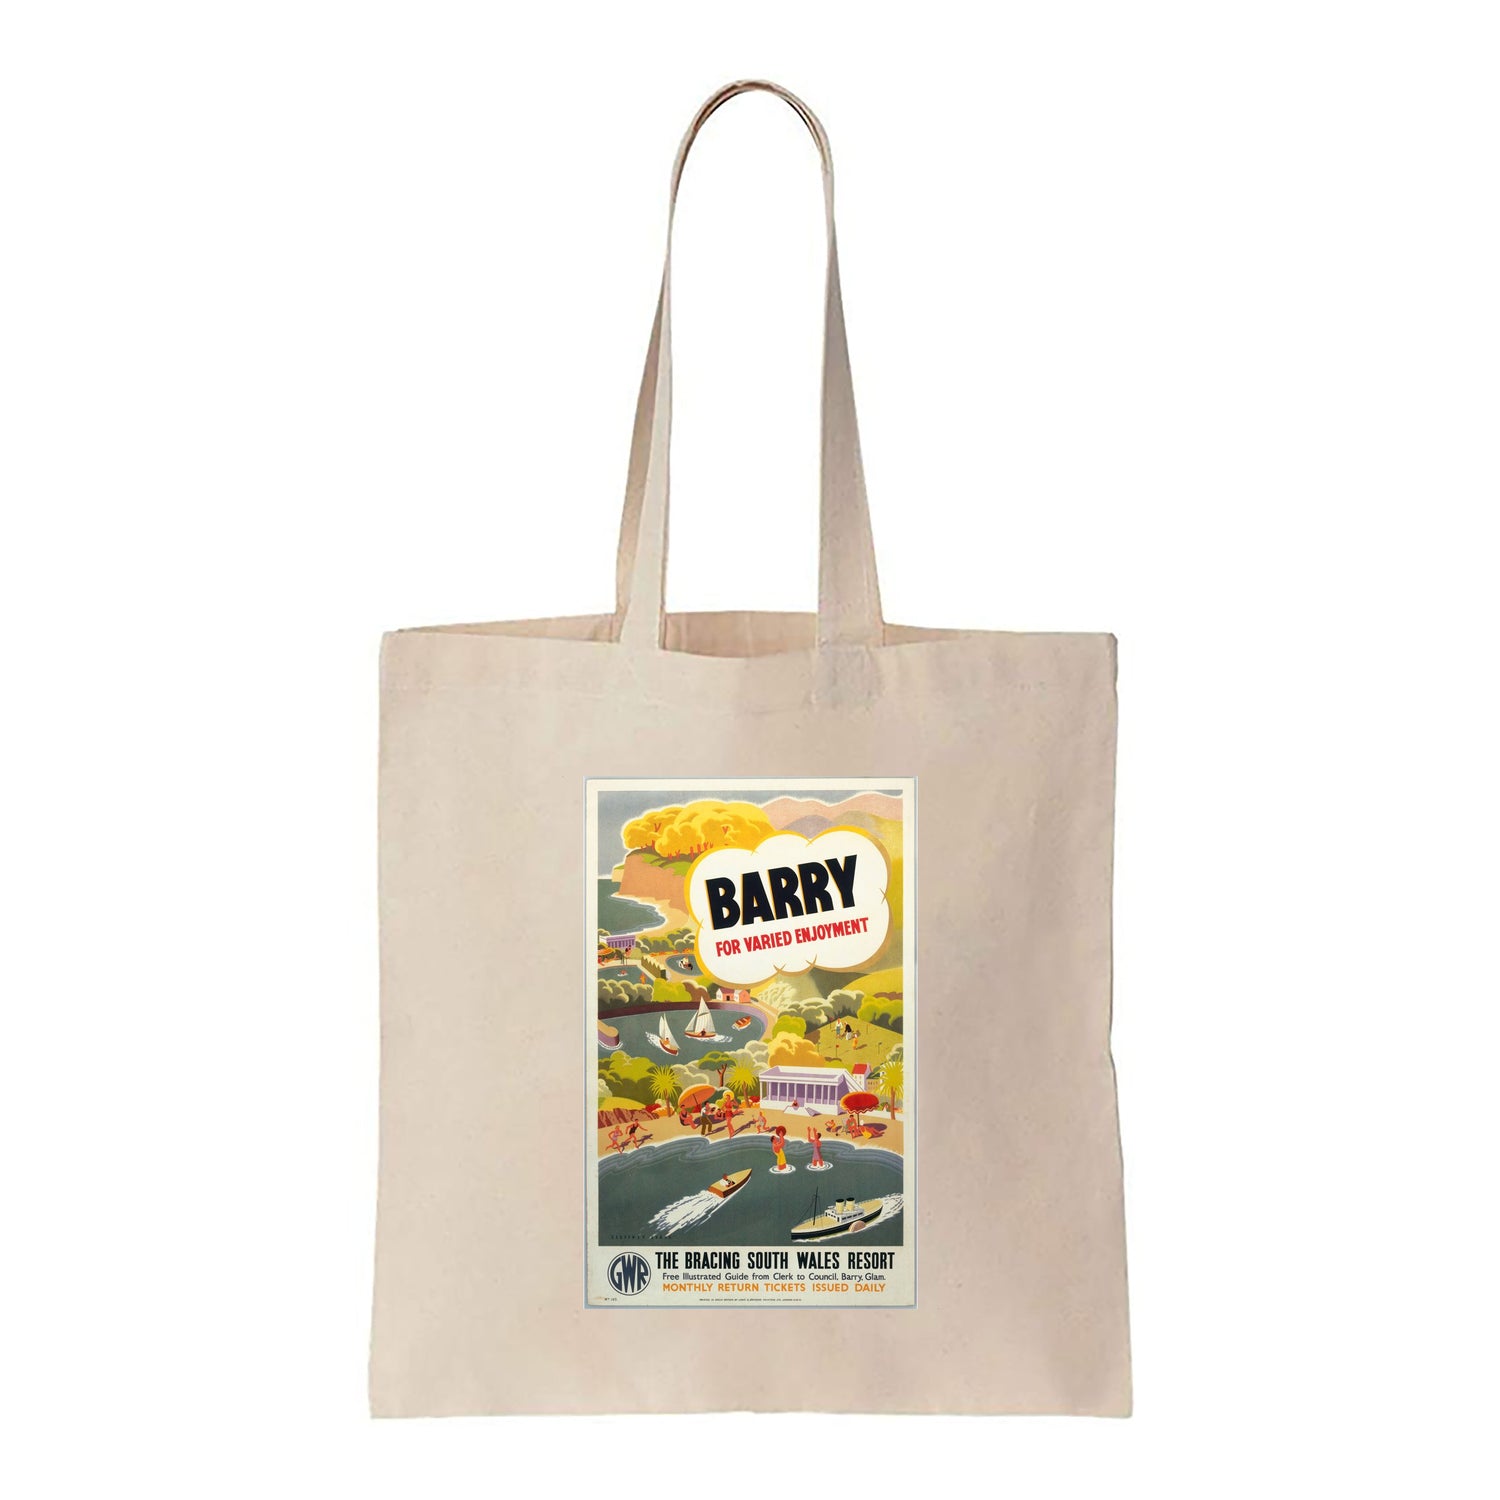 Barry for Varied Enjoyment - Canvas Tote Bag